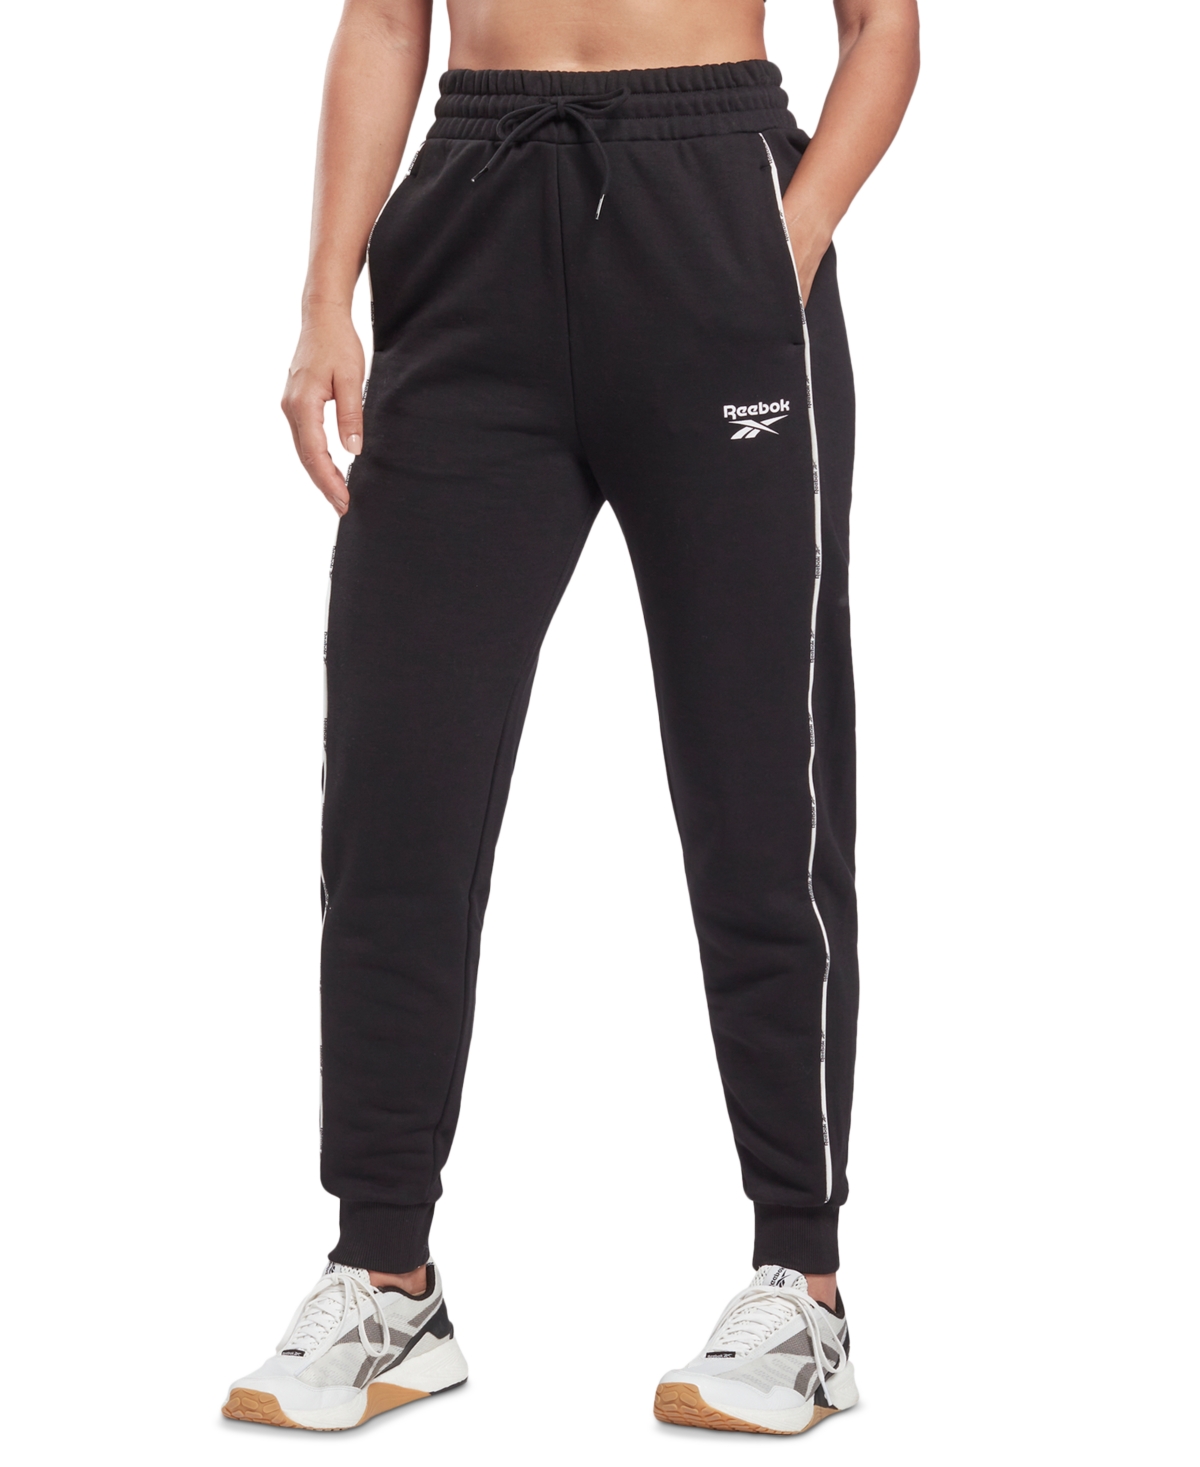 Reebok Boys' Active Joggers Size: 4-16 2 Pack Fleece Athletic Sweatpants 